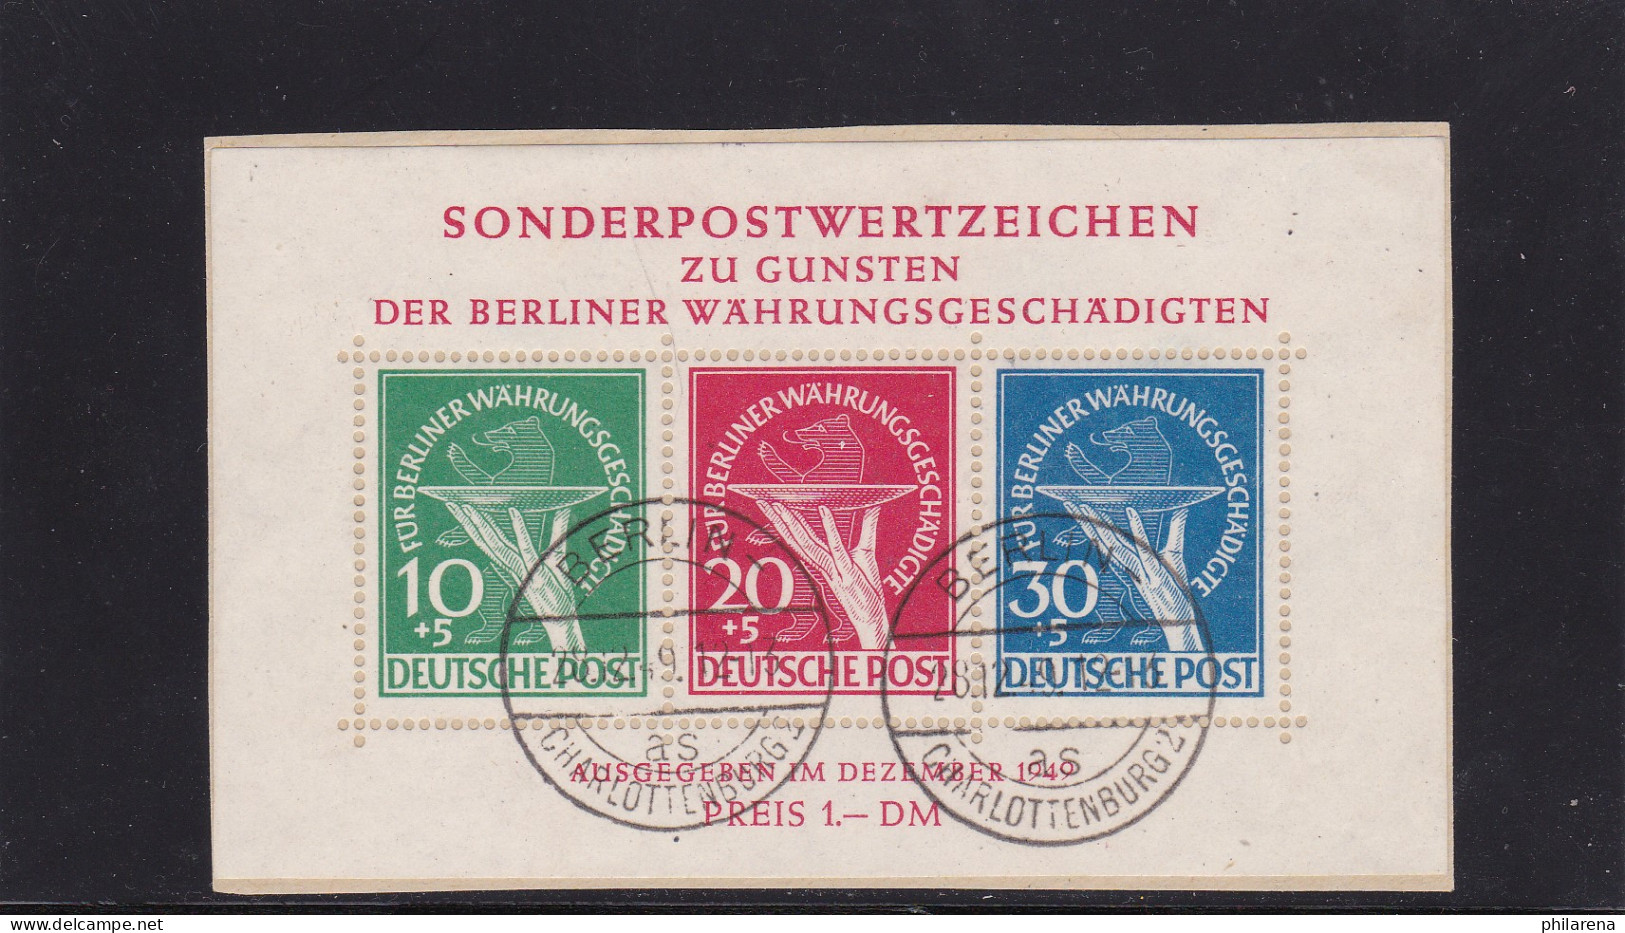 Berlin: Block Nr. 1, Gestempelt Mit BPP Foto Attest - Used Stamps